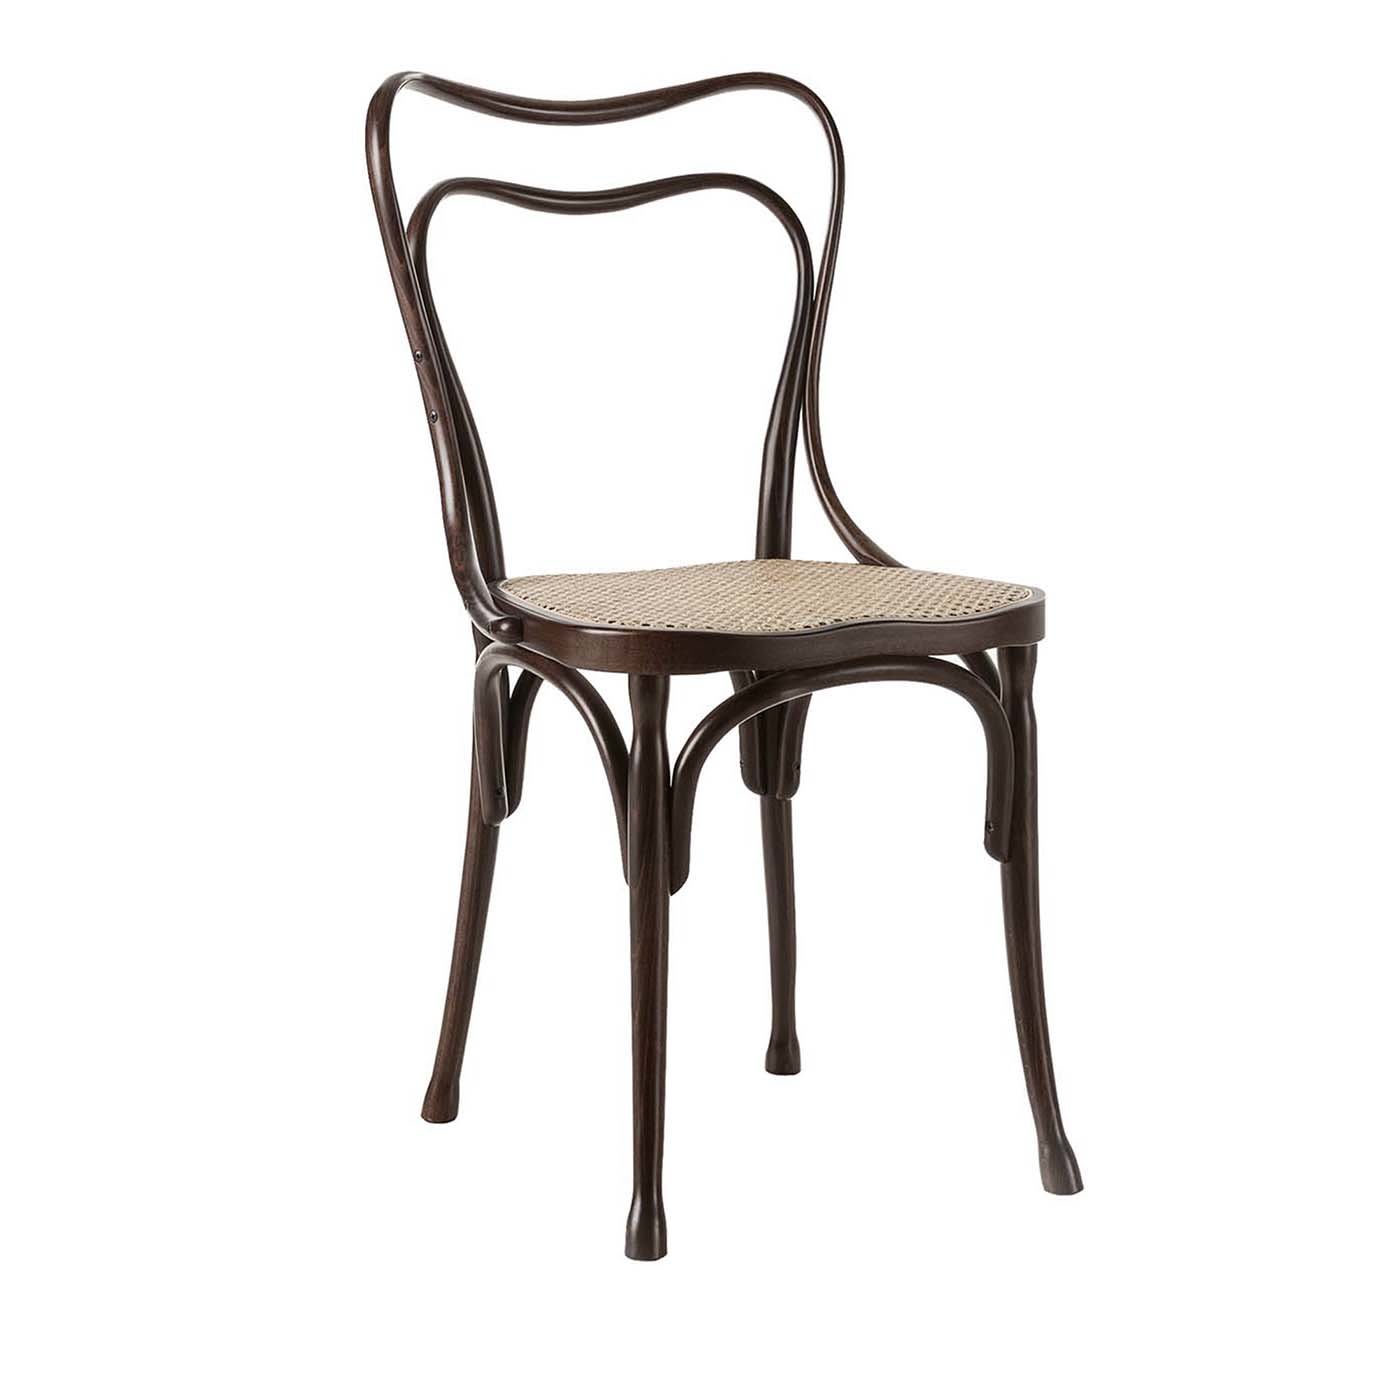 Loos Café Museum Brown Chair by Adolf Loos - Gebrüder Thonet Vienna GmbH (GTV) – Wiener GTV Design